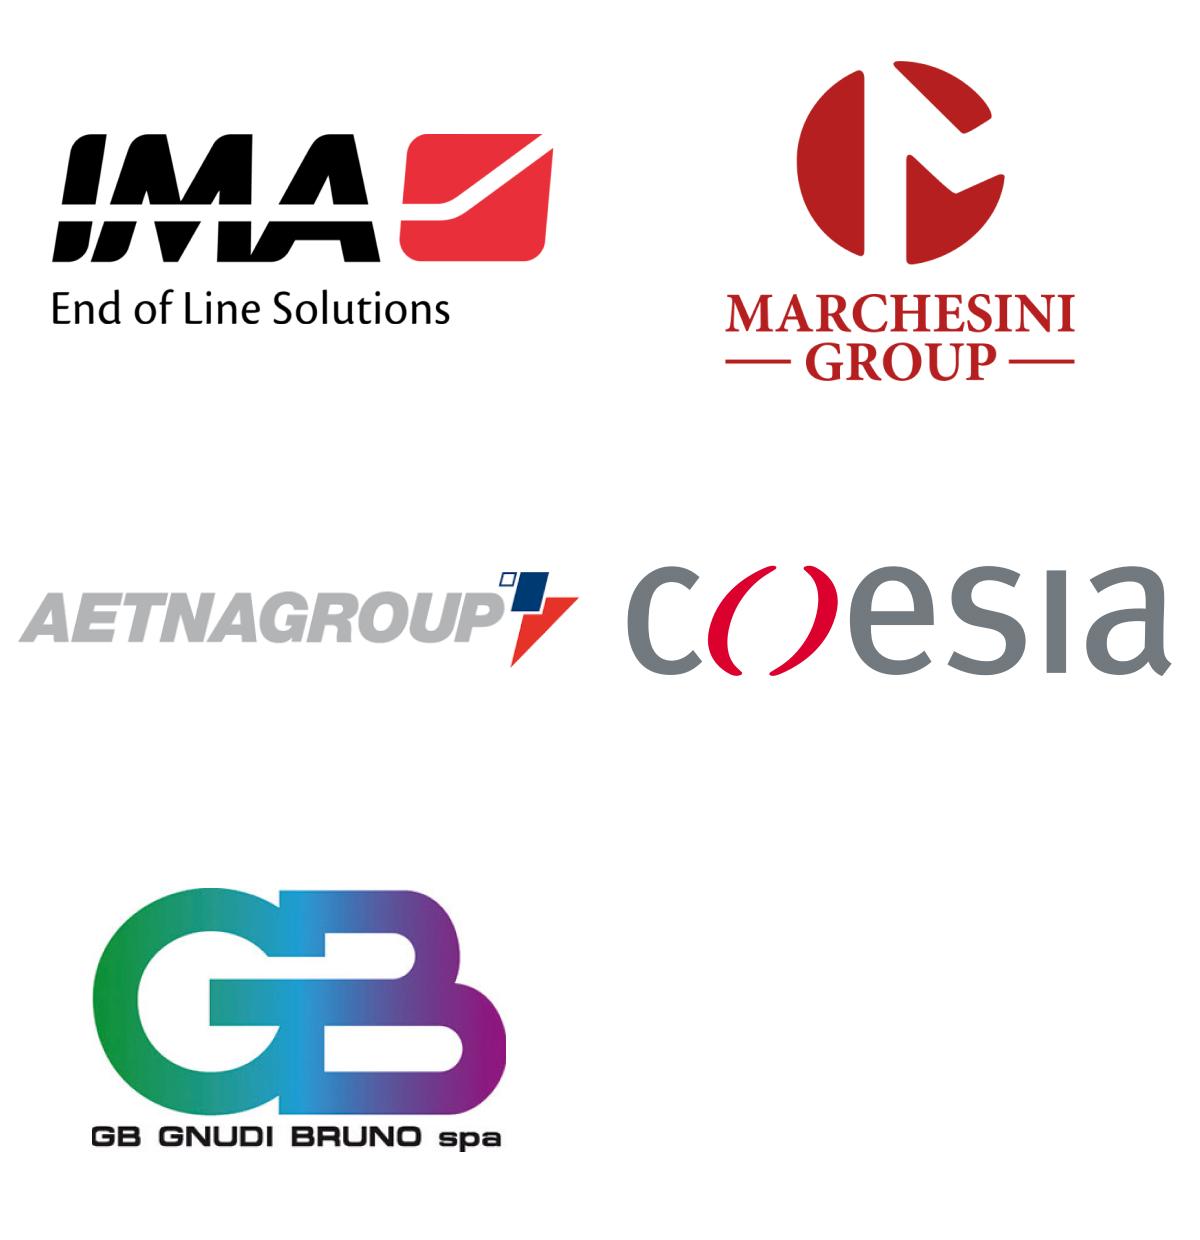 Immagini loghi top brand colonna packaging: IMA, Aetna group, Marchesini group, GB Gnudi Bruno spa, Coesia.